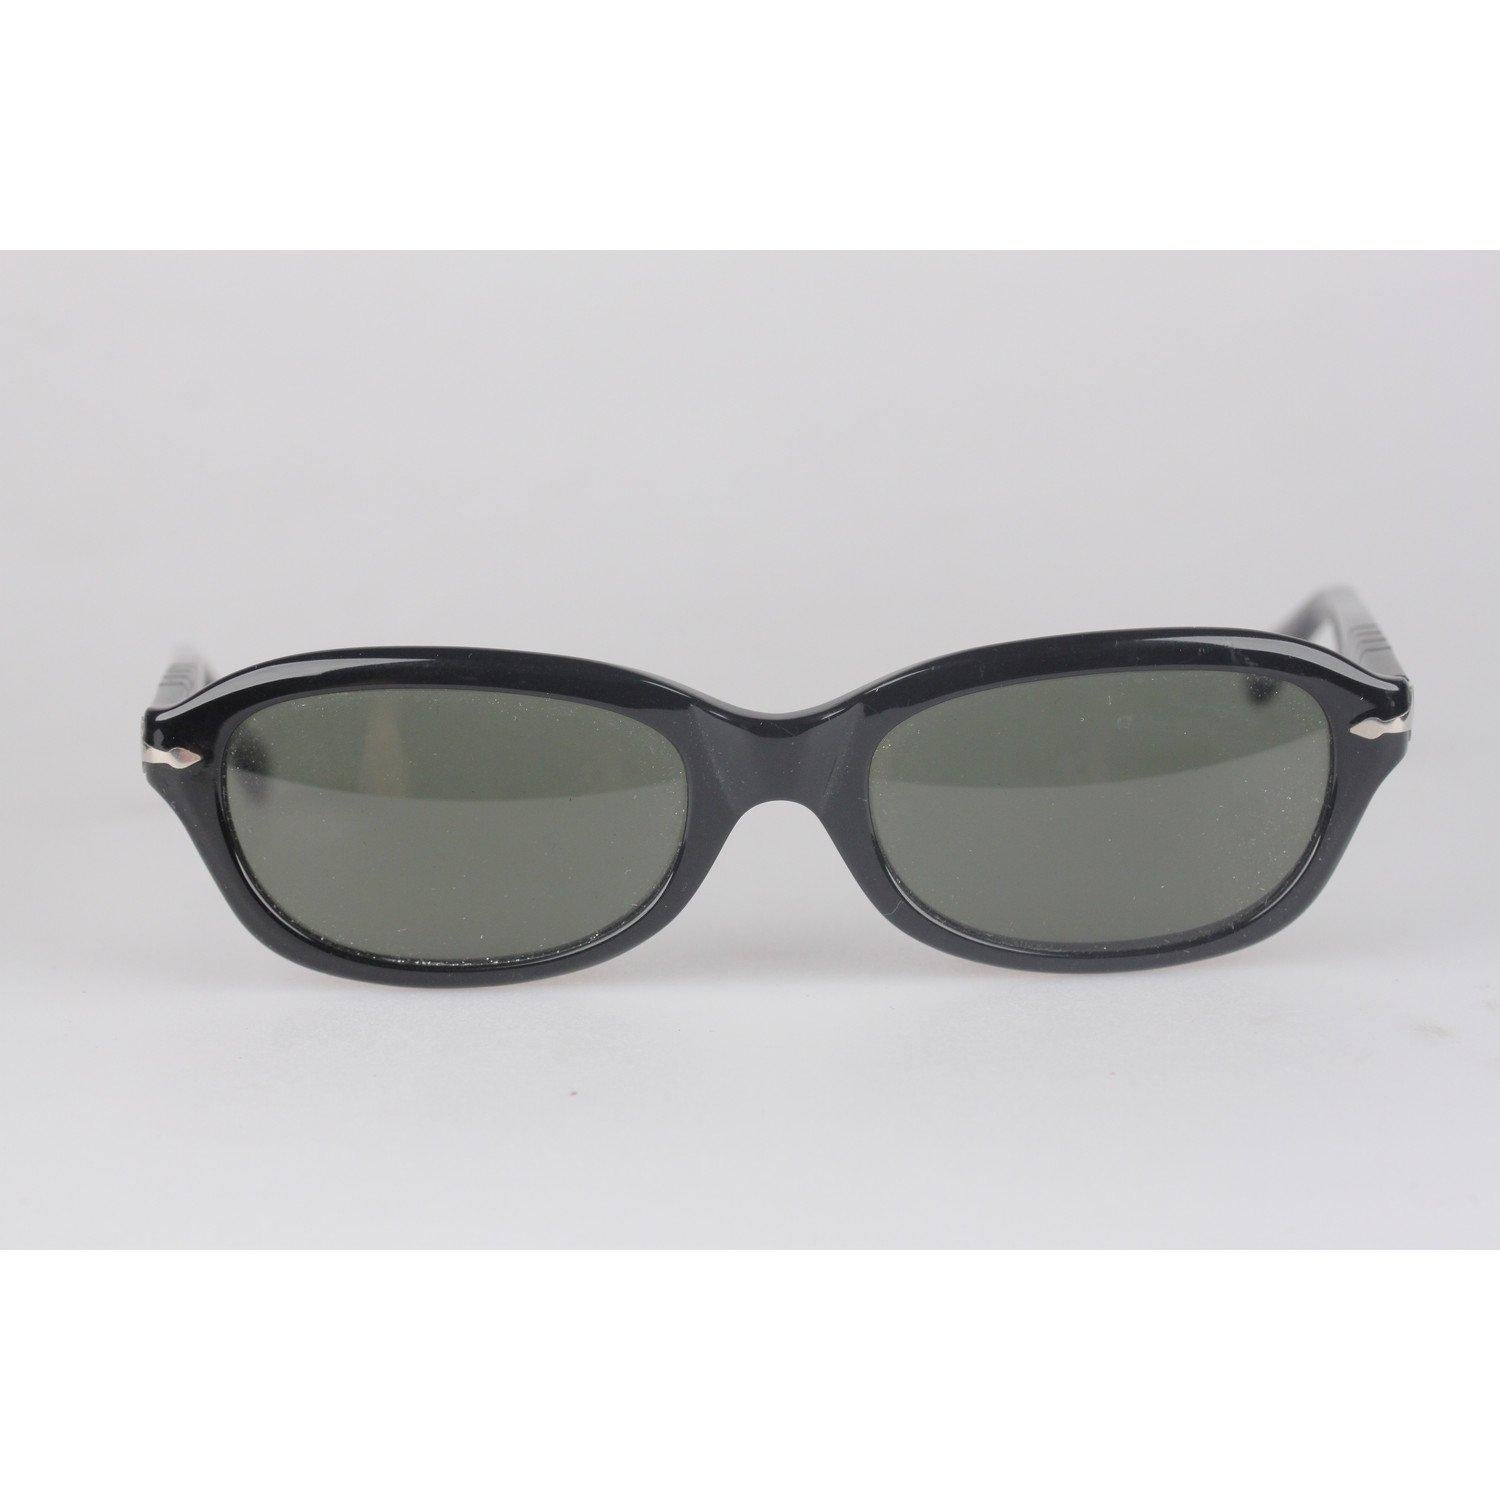 Persol Ratti Vintage Black Unisex Sunglasses PP503 54mm New Old Stock 1